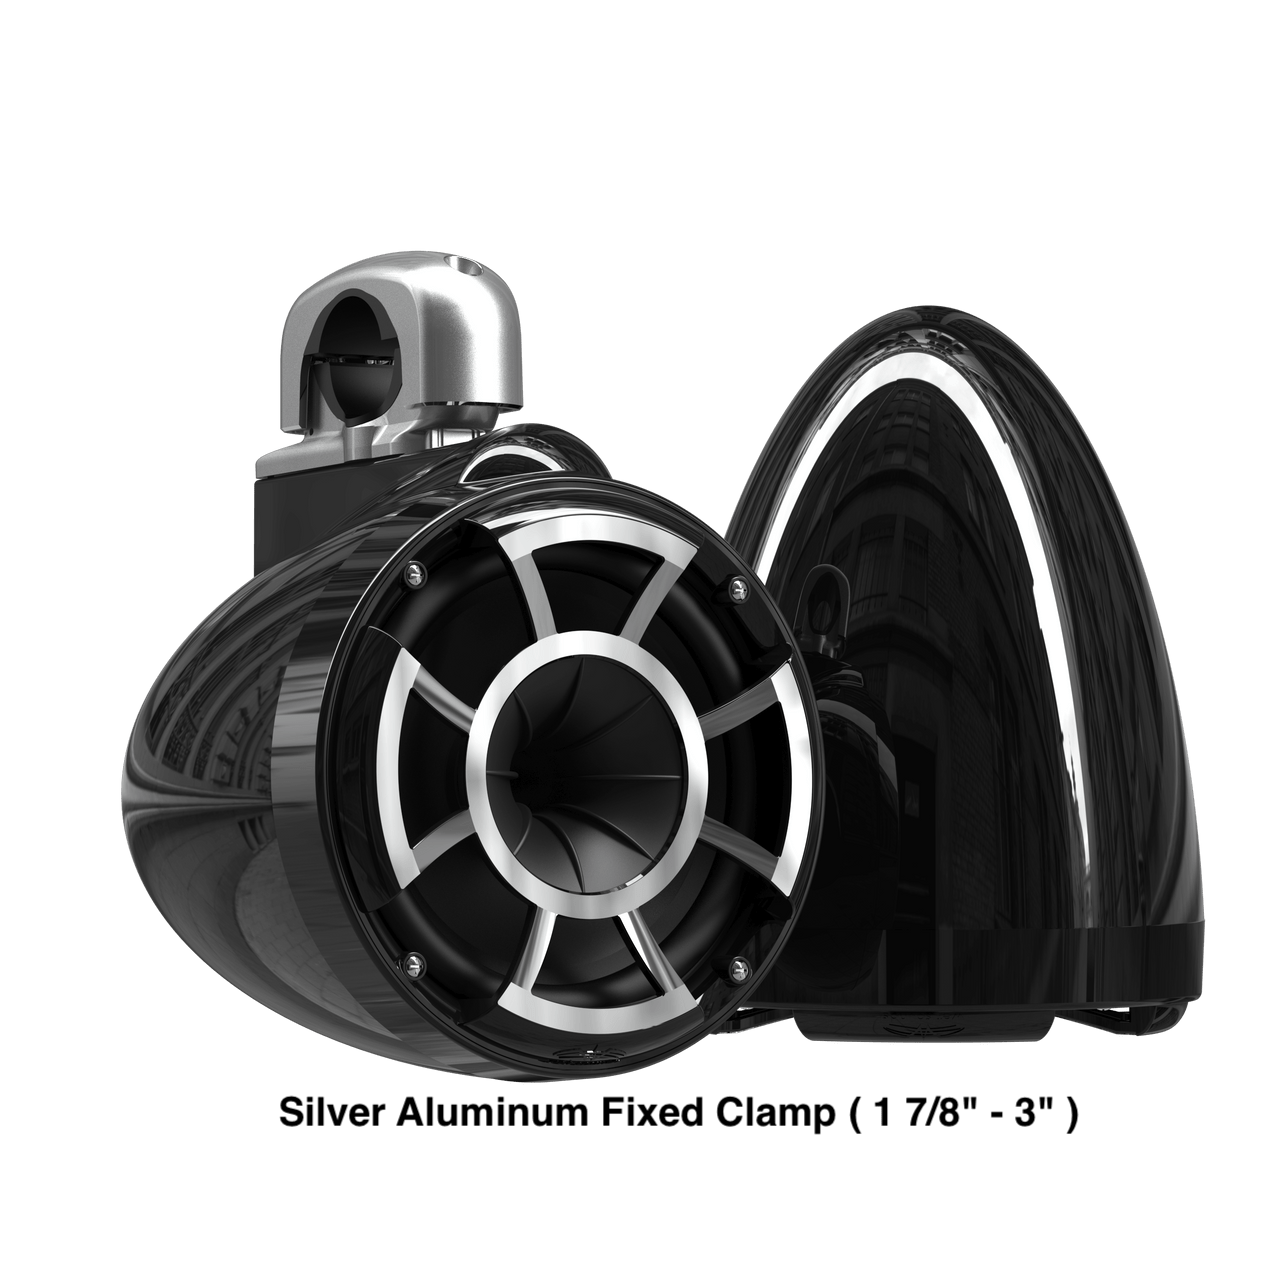 Wet Sounds Boat Wake Tower Speakers Silver Aluminum Fixed Clamp ( 1 7/8" - 3" ) Wet Sounds REV8™ Black V2 | Revolution Series 8" Black Tower Speakers